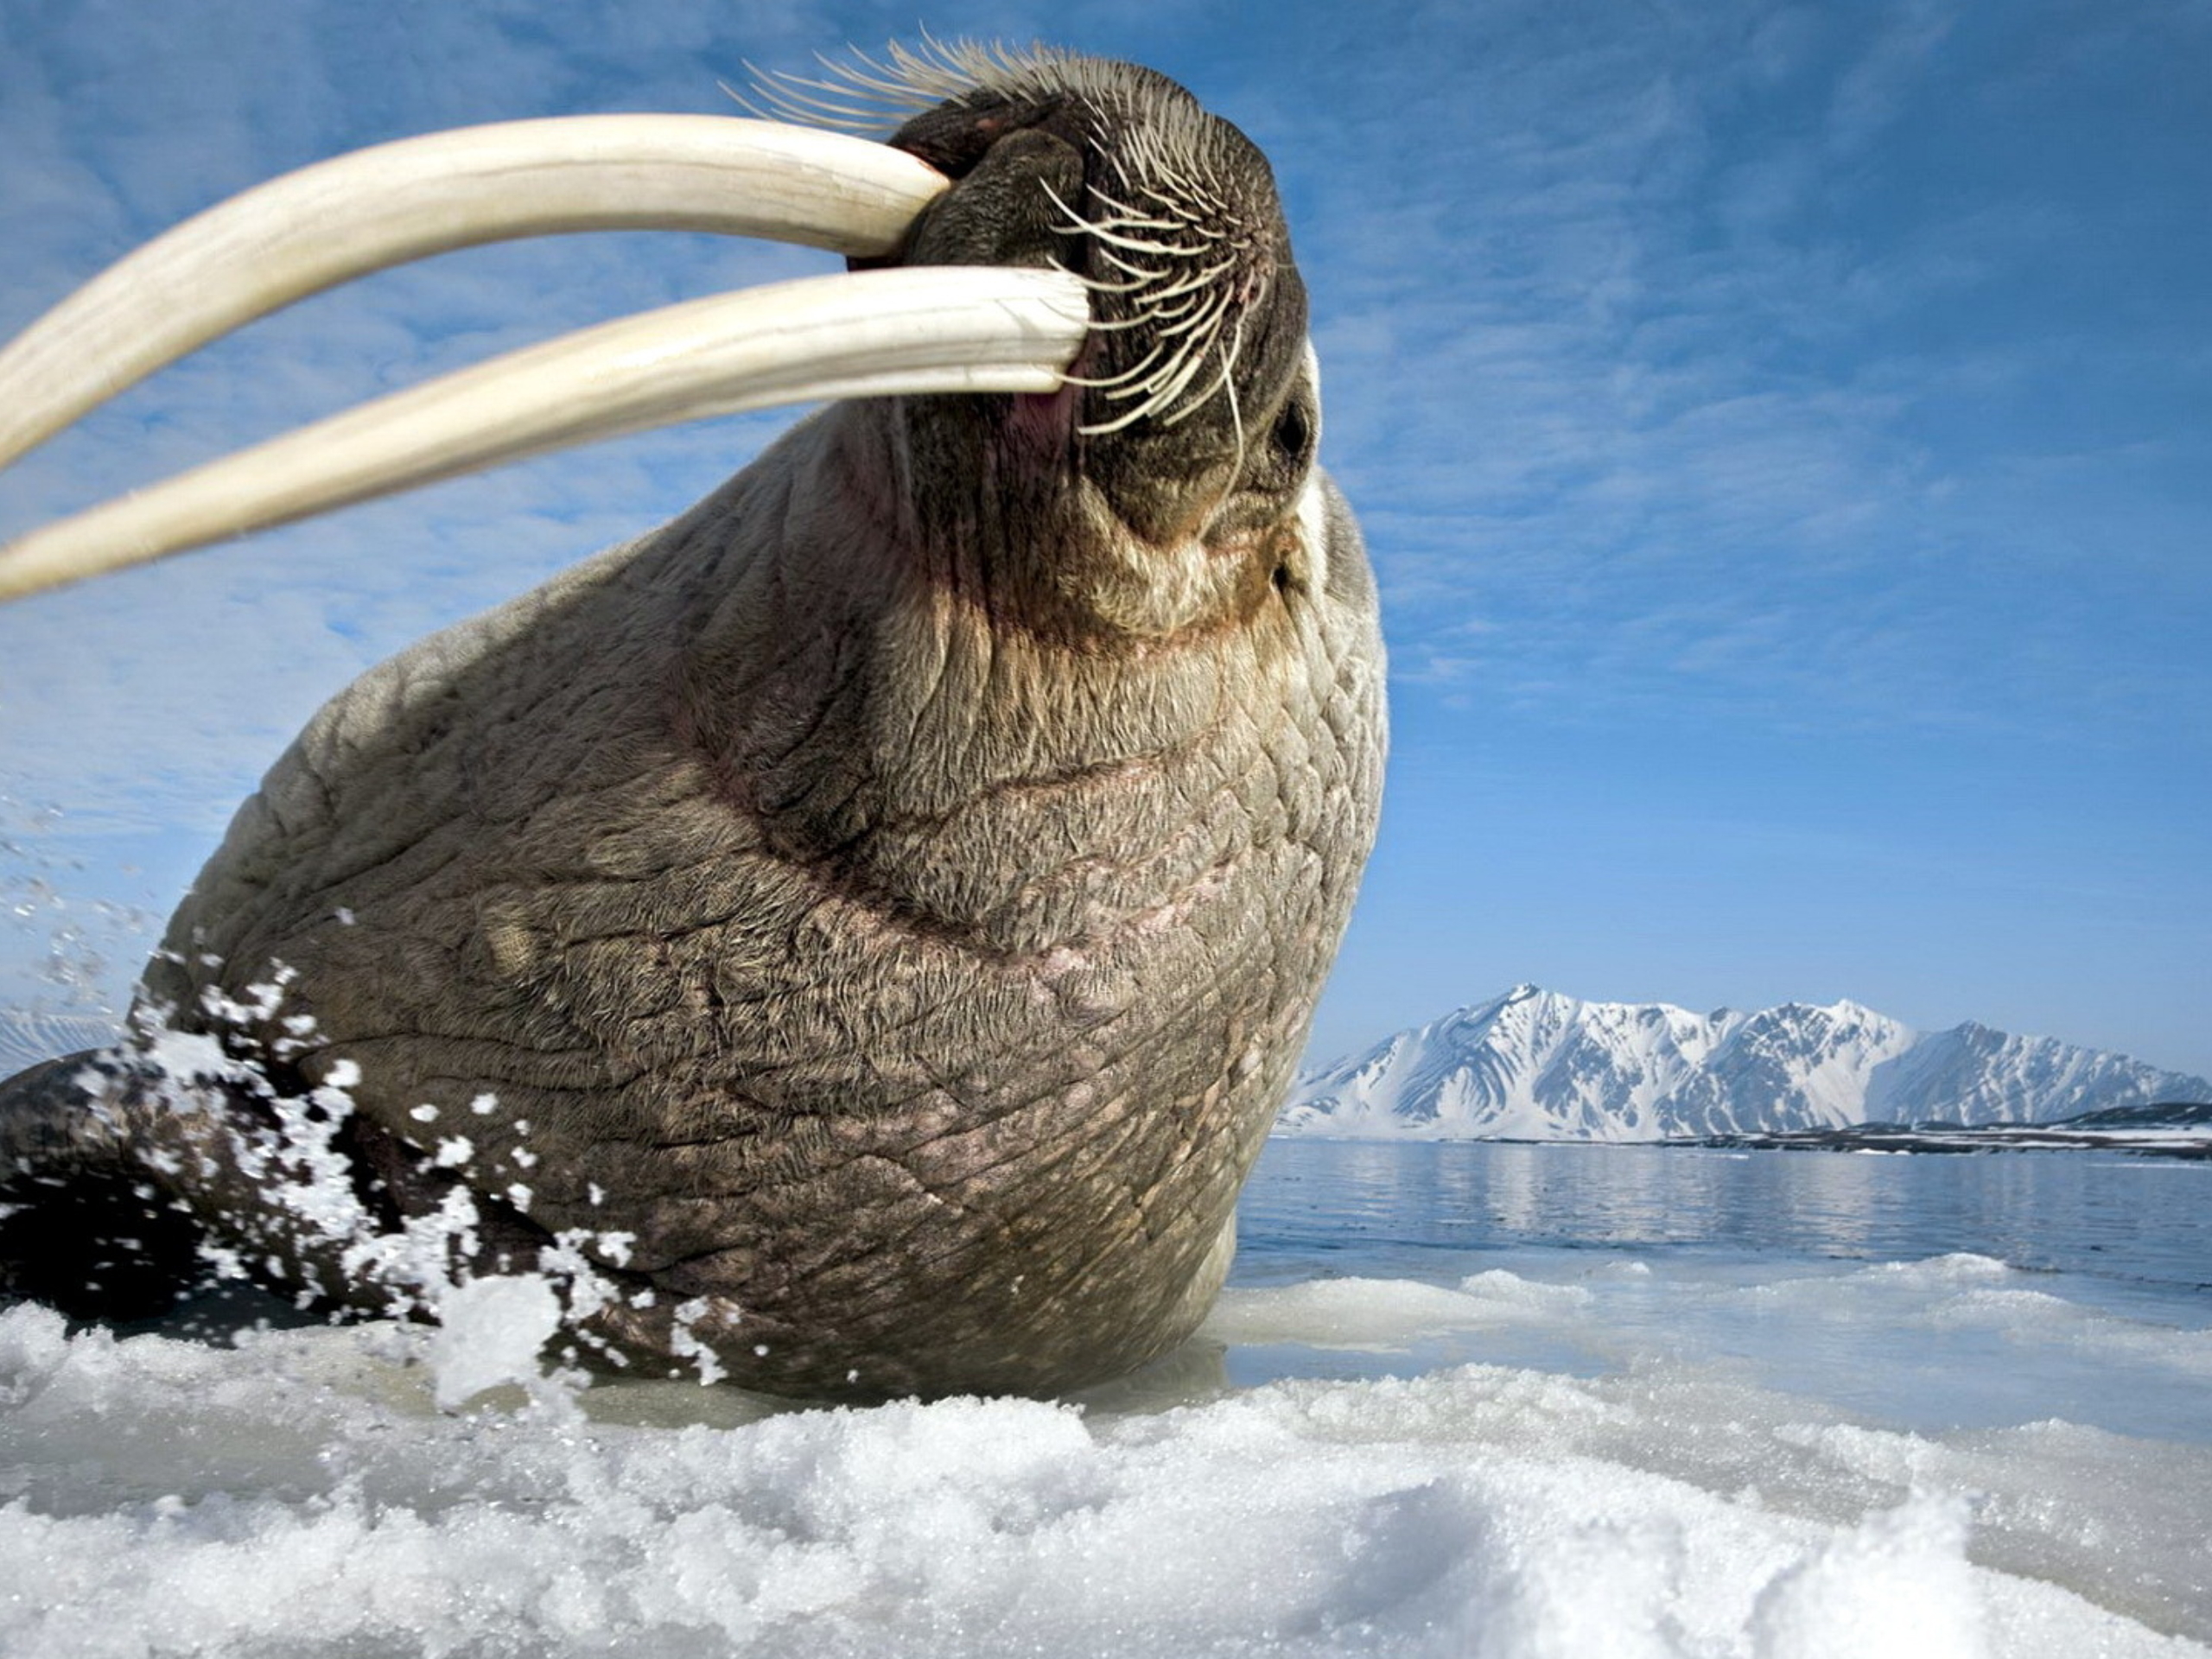 Животные Антарктики Фото С Названиями